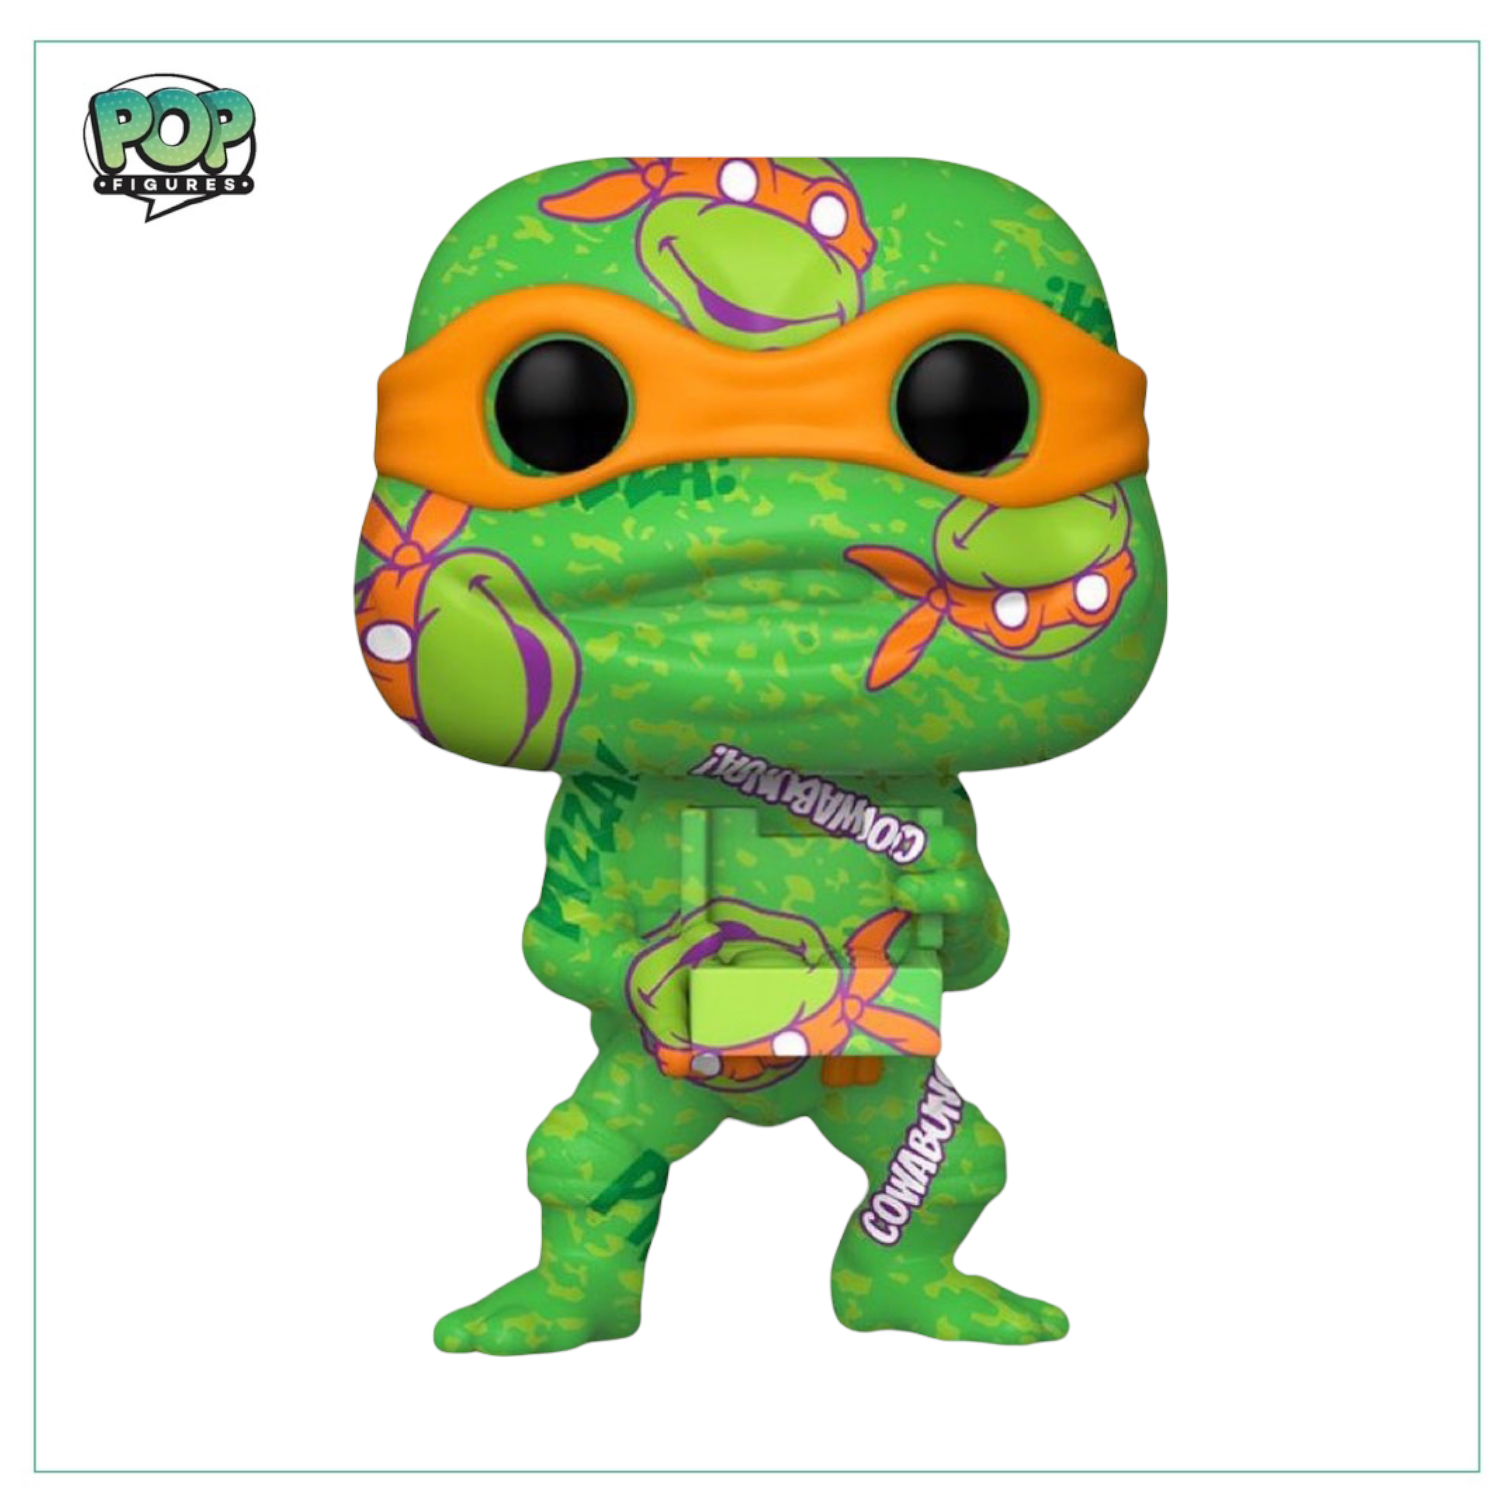 Michelangelo (Art Series) #54 Funko Pop! - Teenage Mutant Ninja Turtles -Target Exclusive